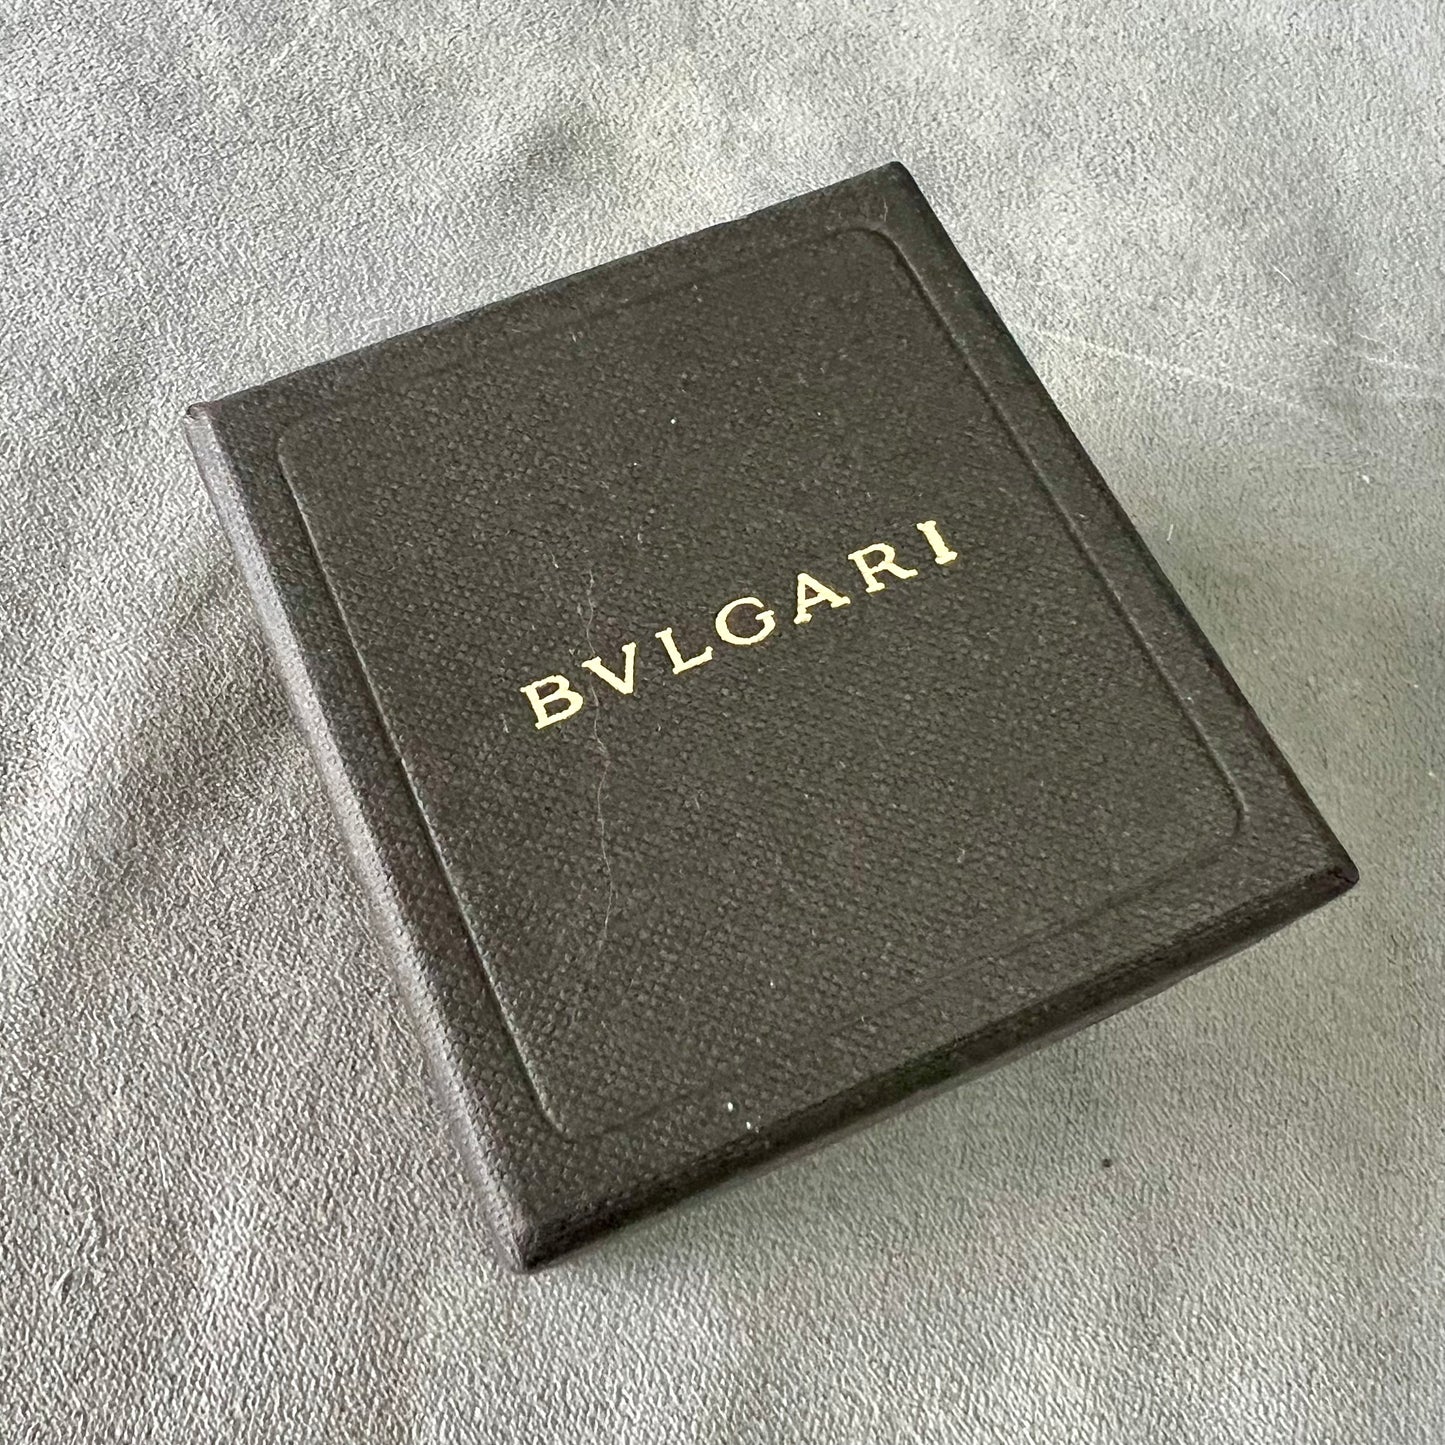 BULGARI Ring Box + Outer Box 2.80x2.75x2.5 inches